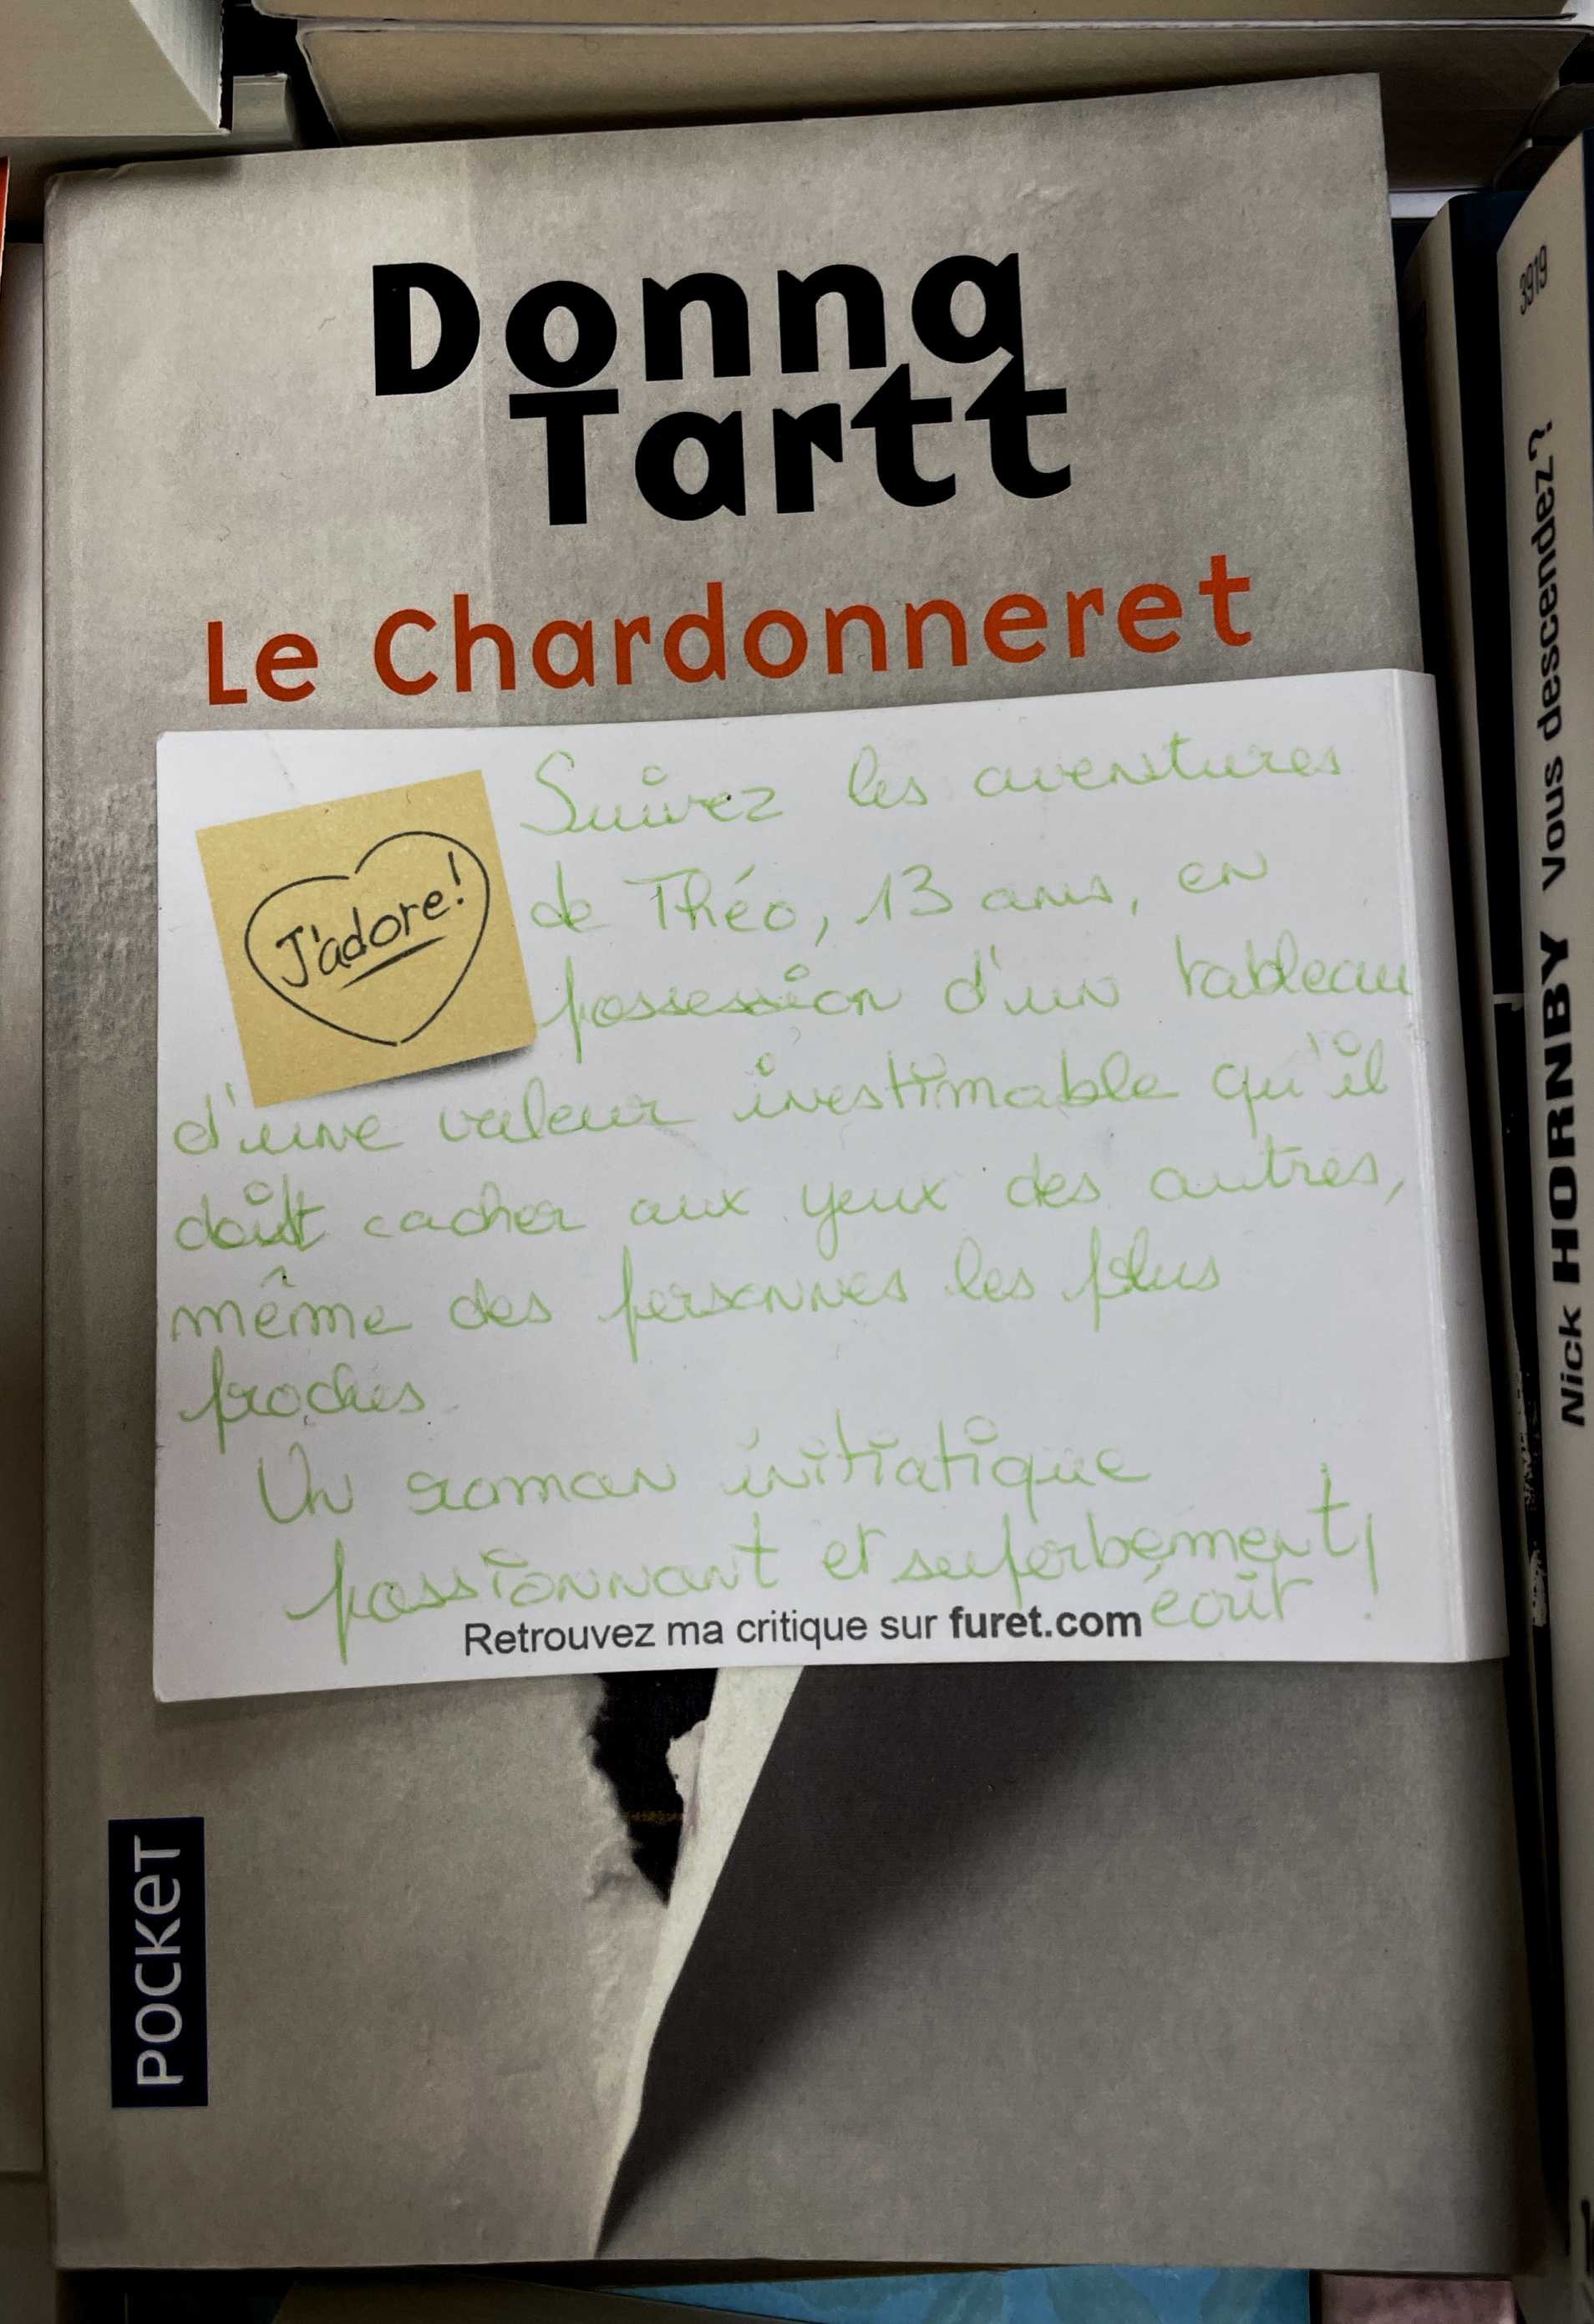 Le chardonneret - Donna Tartt